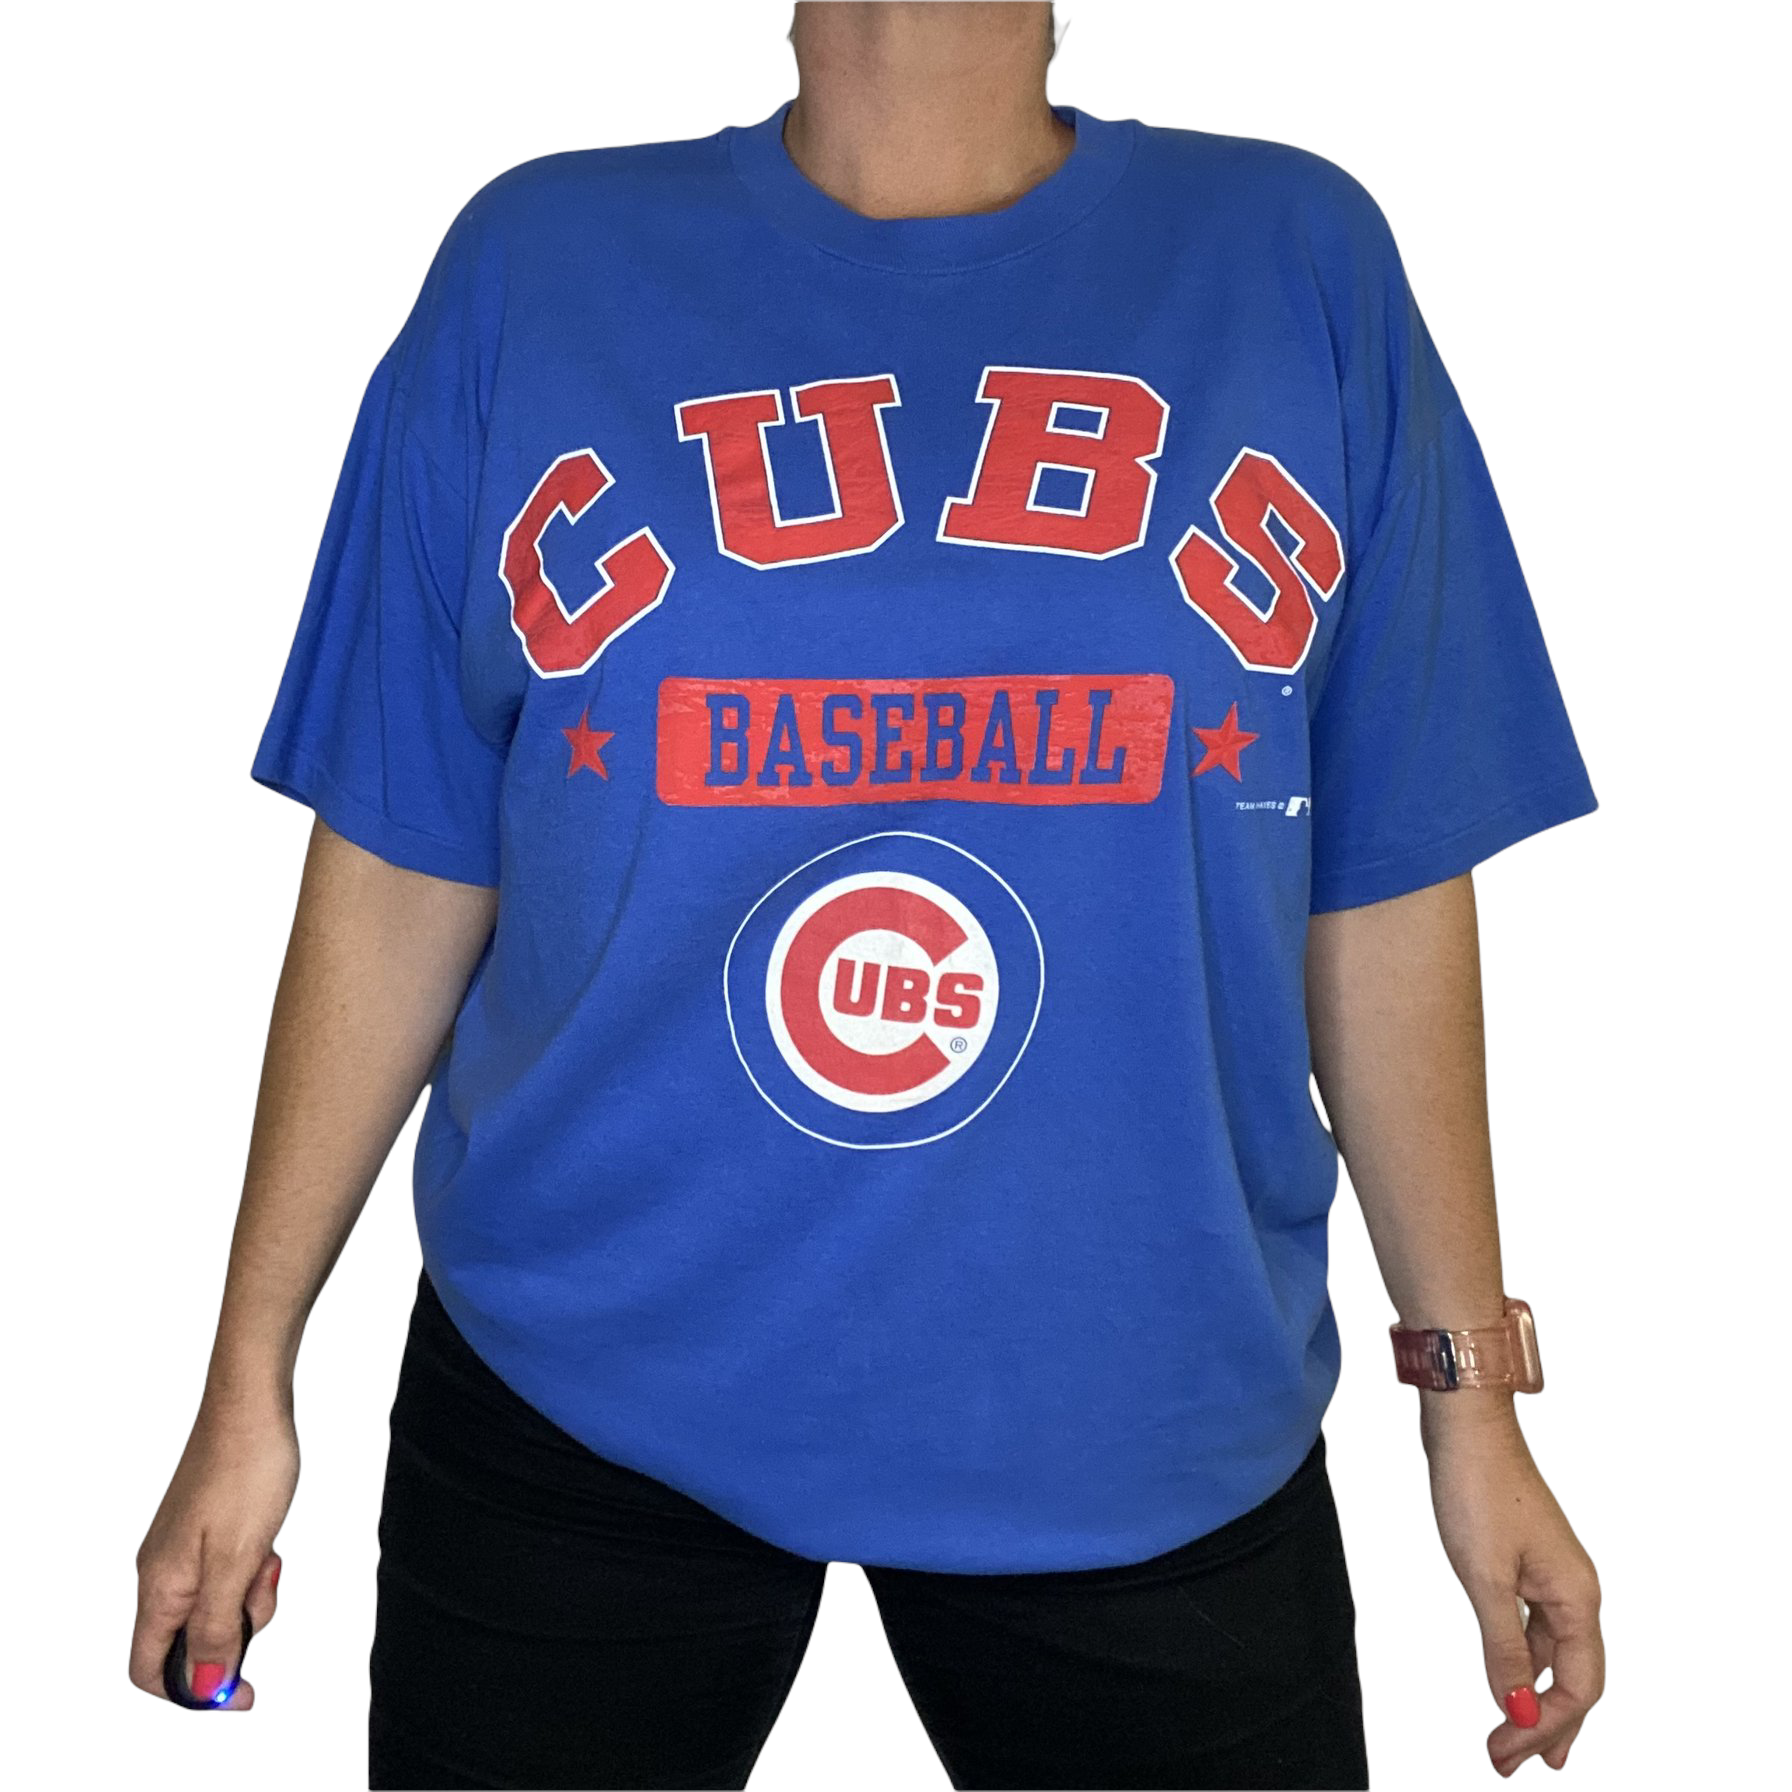 chicago cubs shirt vintage